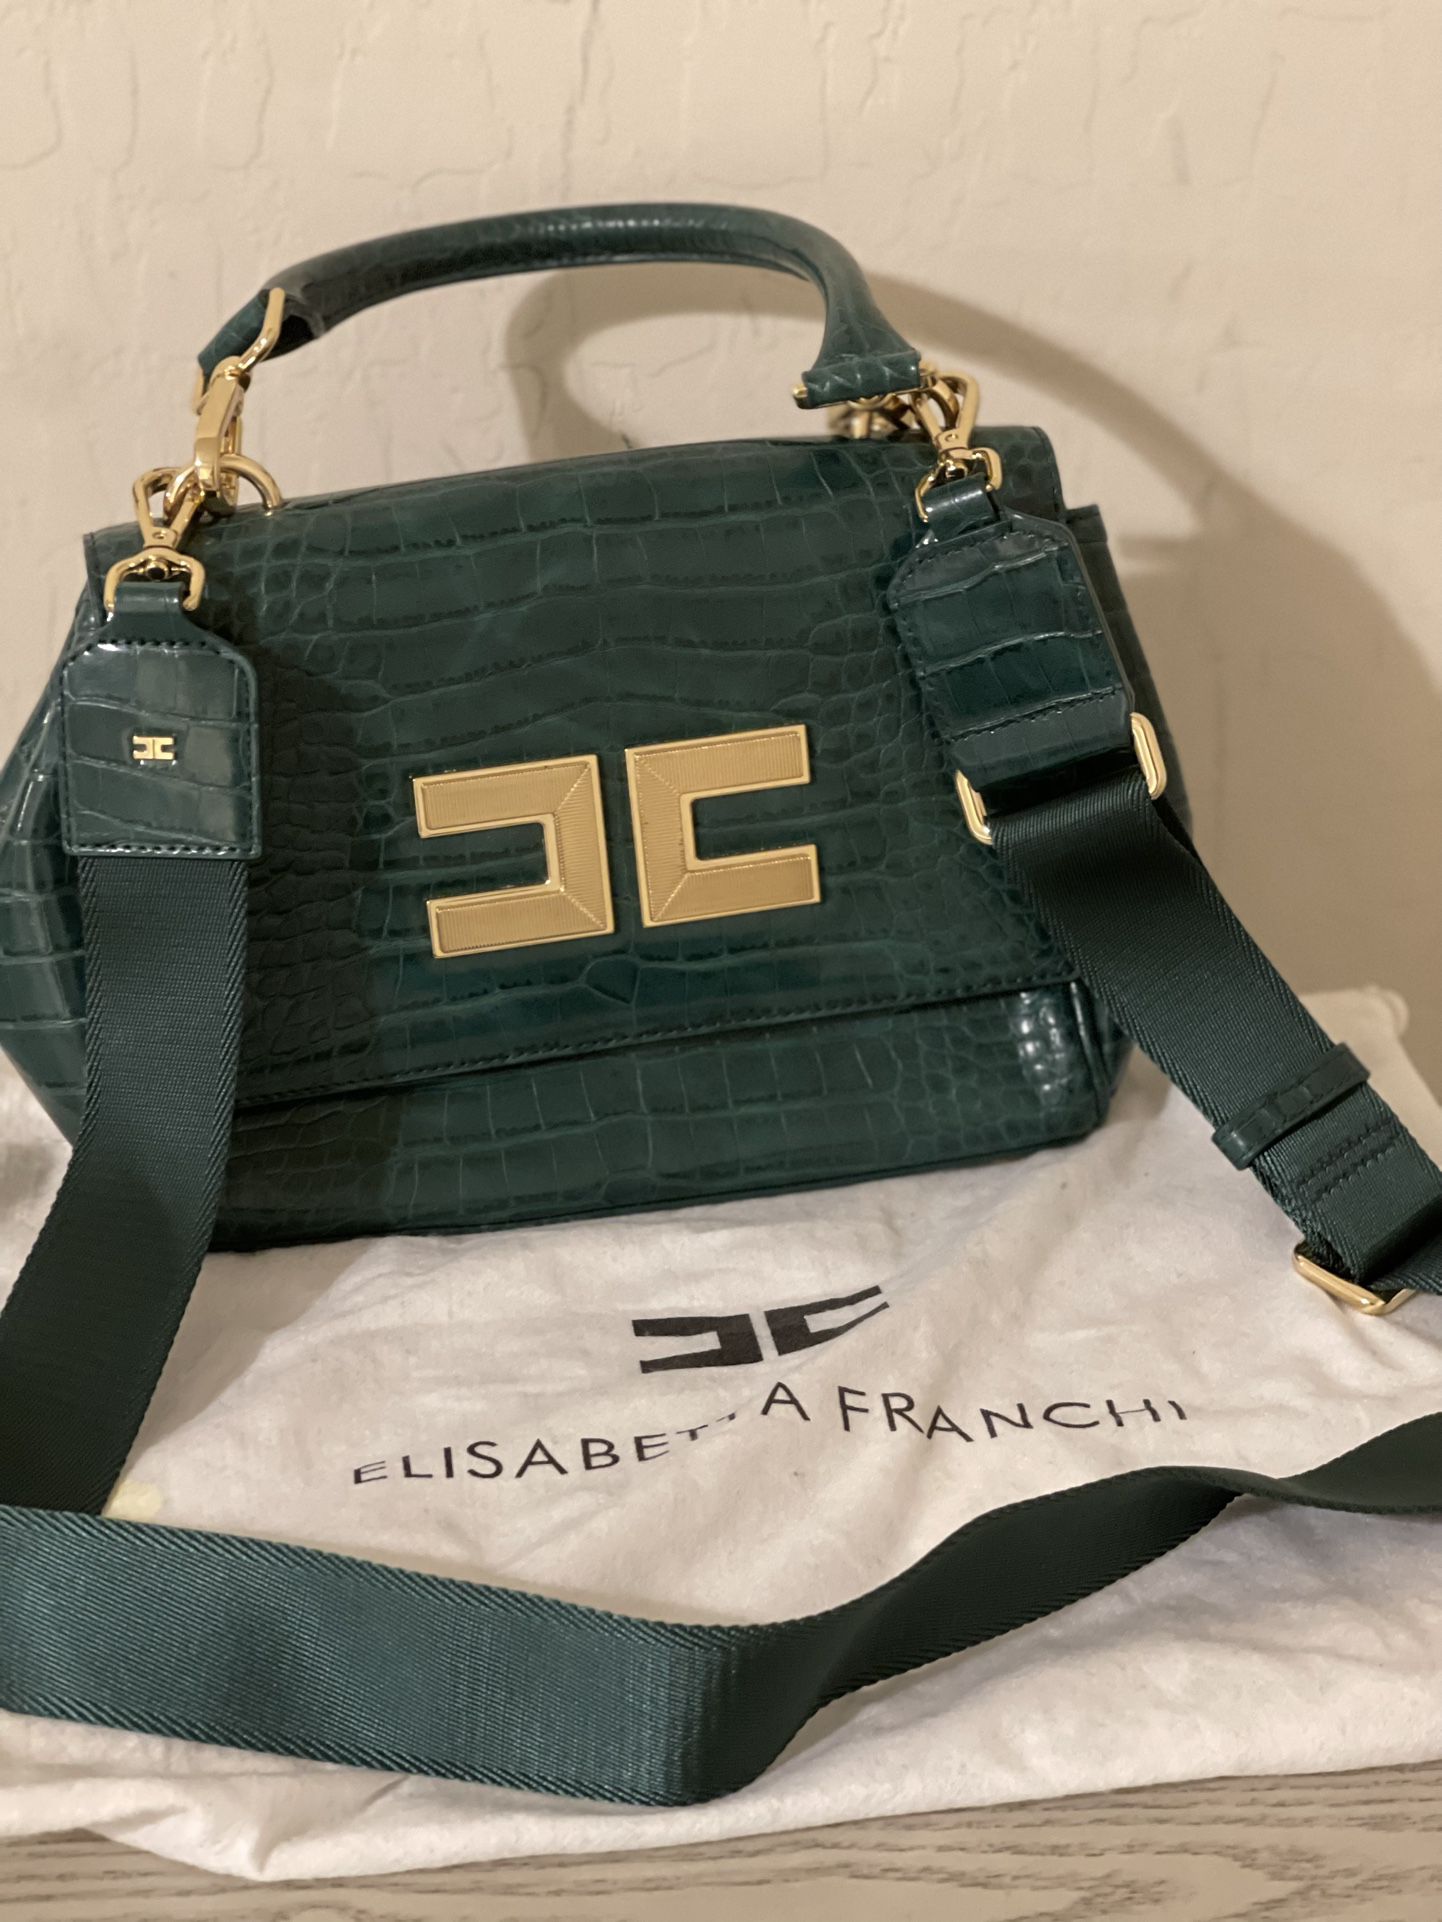 Elisabetta Franchi, Green Bag Medium Size for Sale in Las Vegas, NV ...